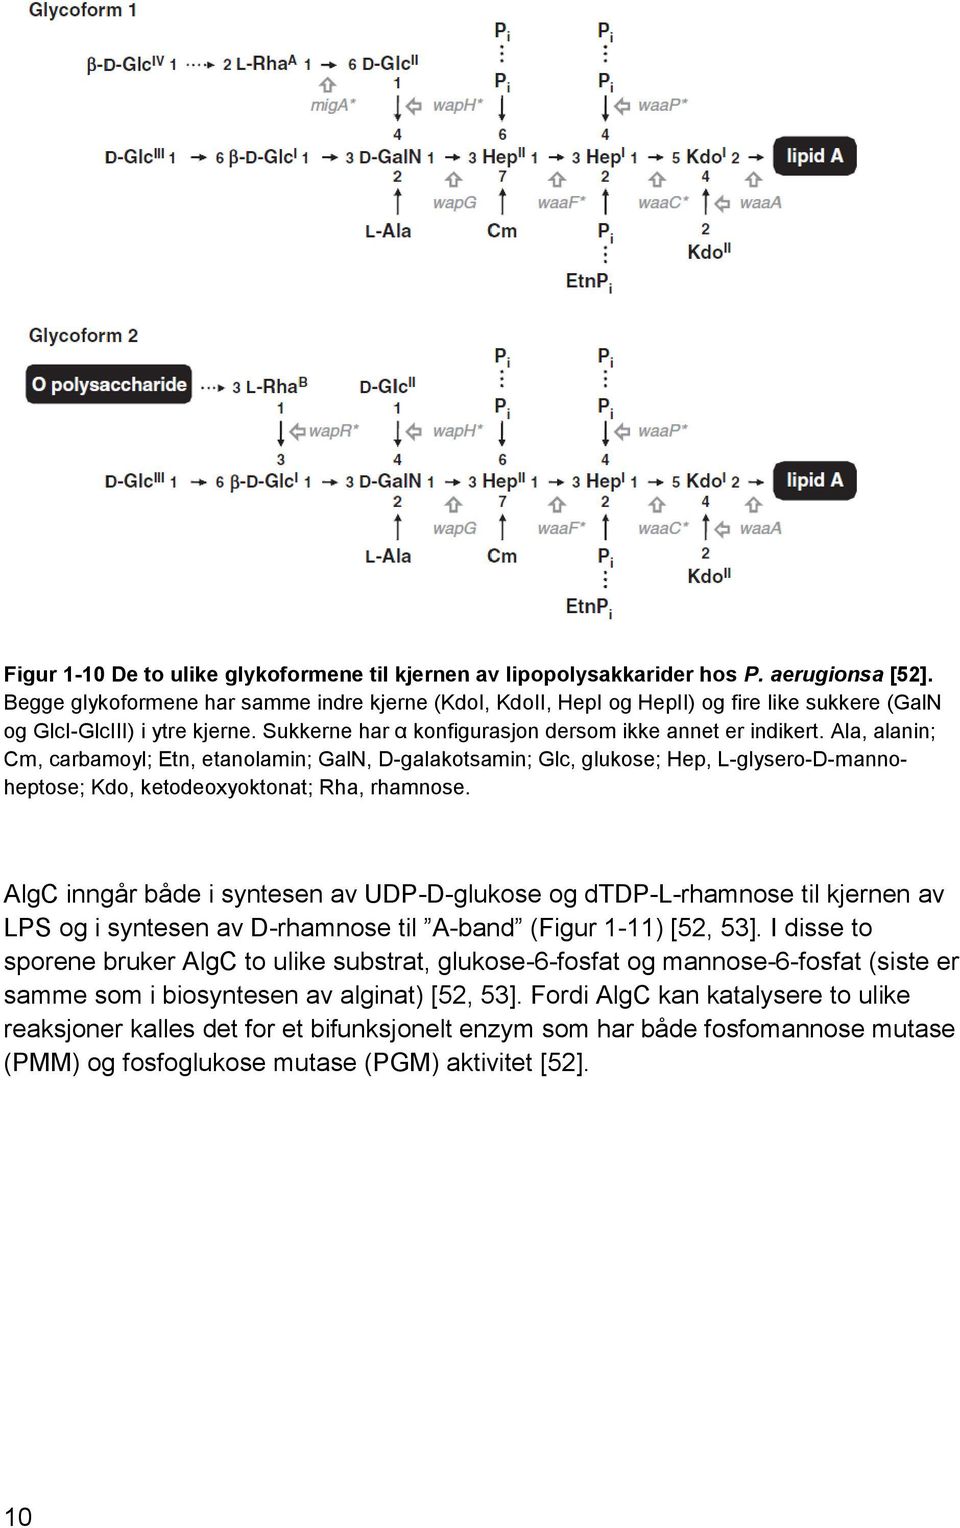 Ala, alanin; Cm, carbamoyl; Etn, etanolamin; GalN, D-galakotsamin; Glc, glukose; Hep, L-glysero-D-mannoheptose; Kdo, ketodeoxyoktonat; Rha, rhamnose.